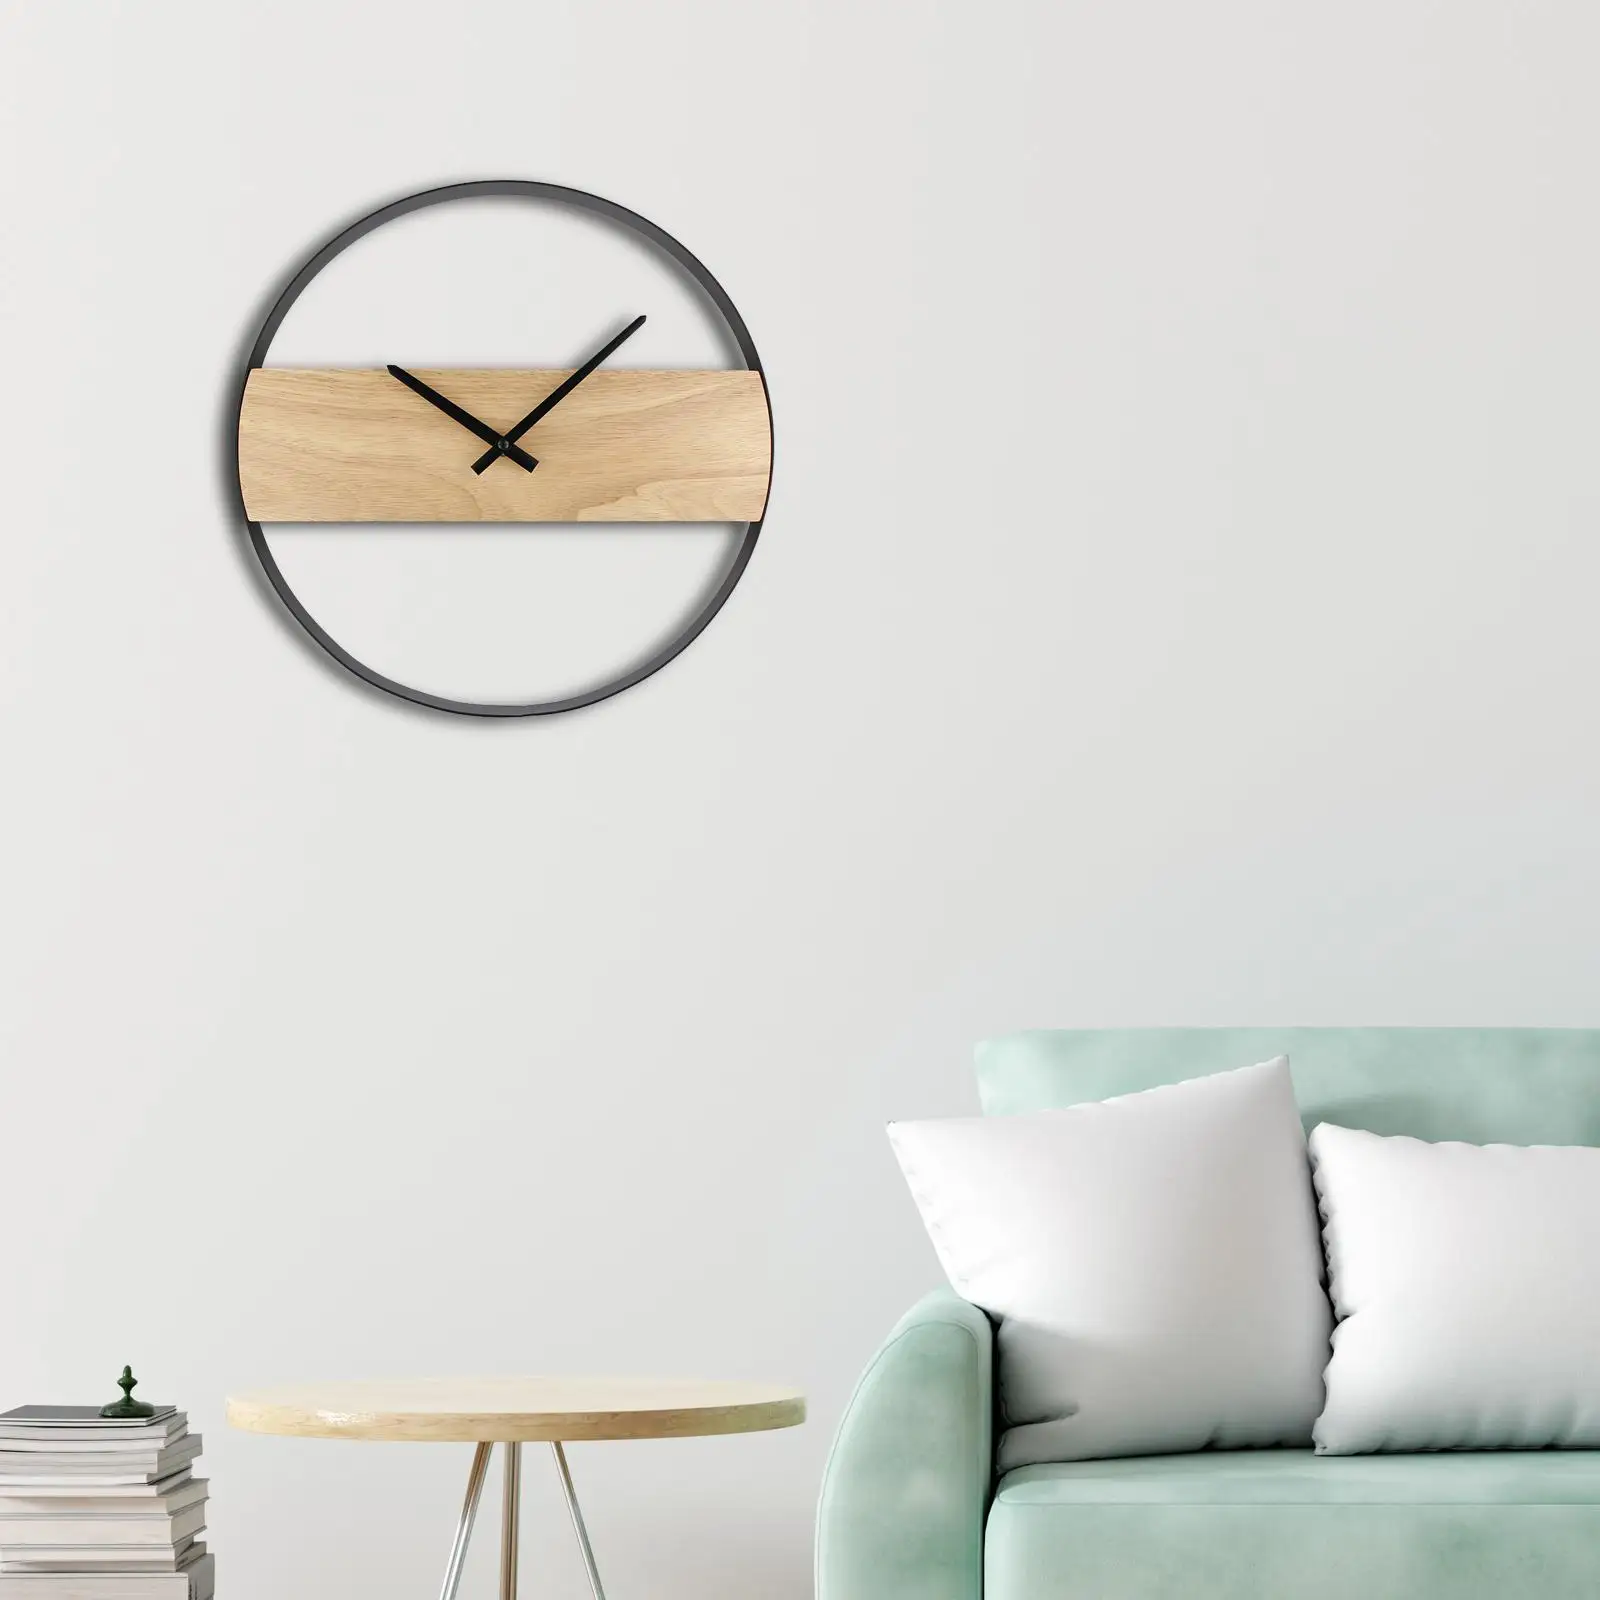 Wooden Wall Clock Hanging DIY Clocks for Living Room Home Dining Room Office Decor